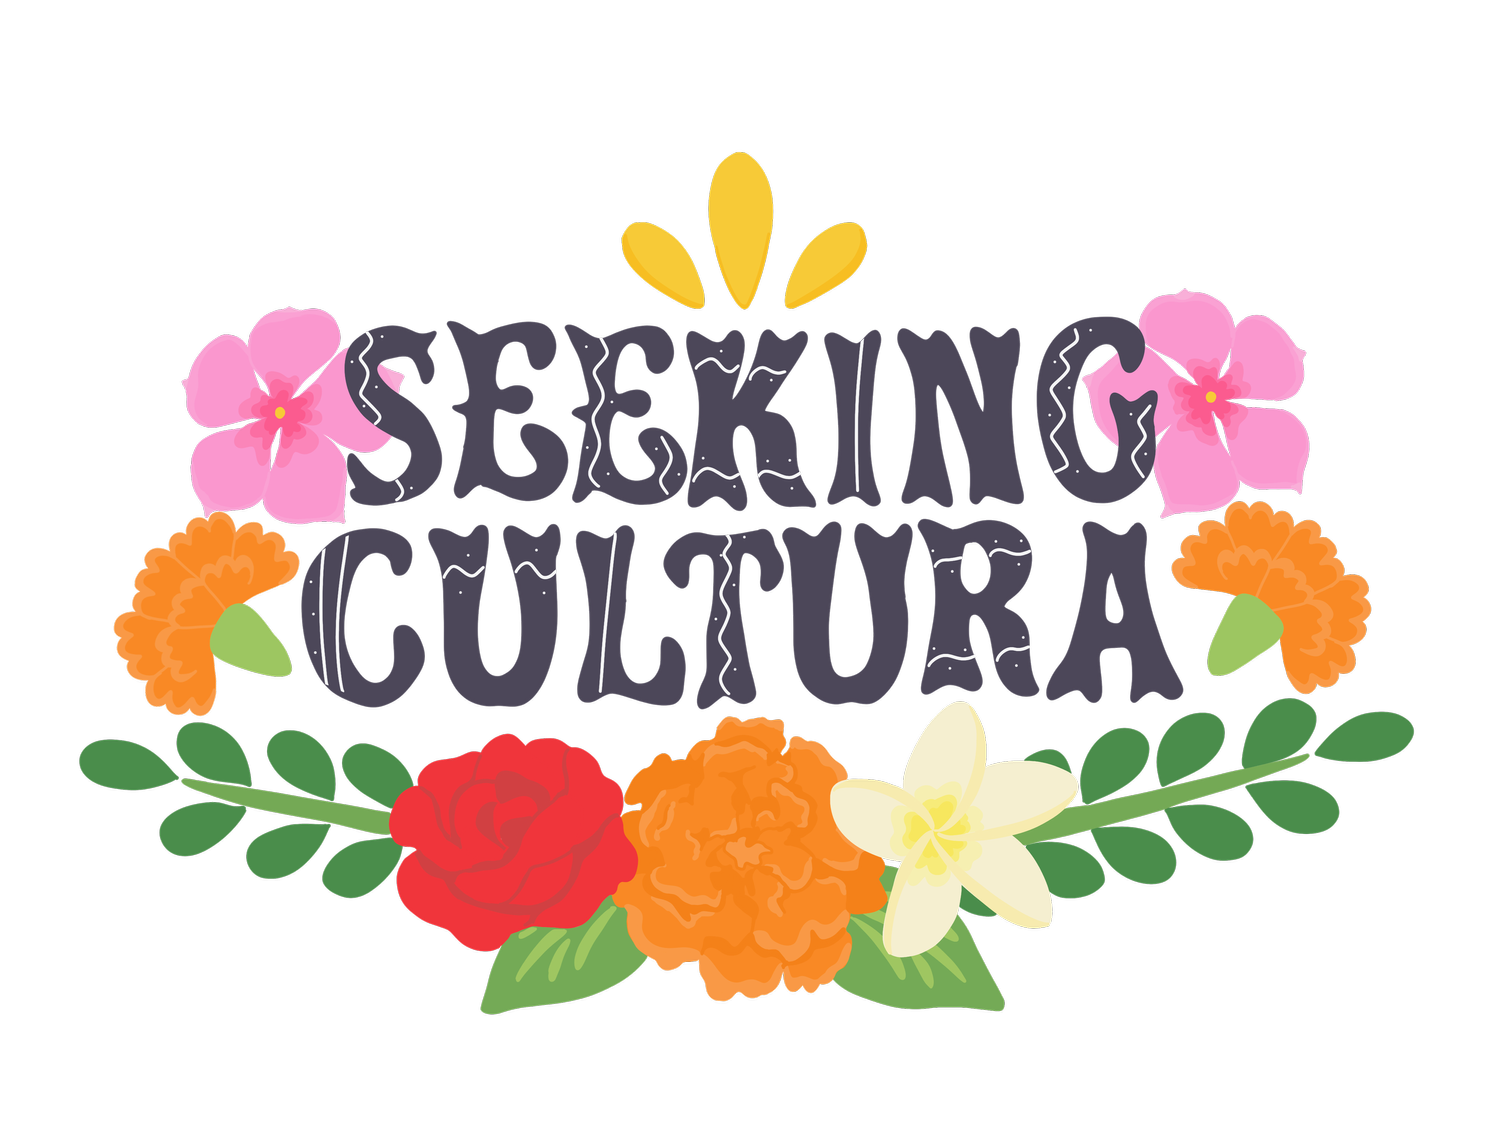 Seeking Cultura